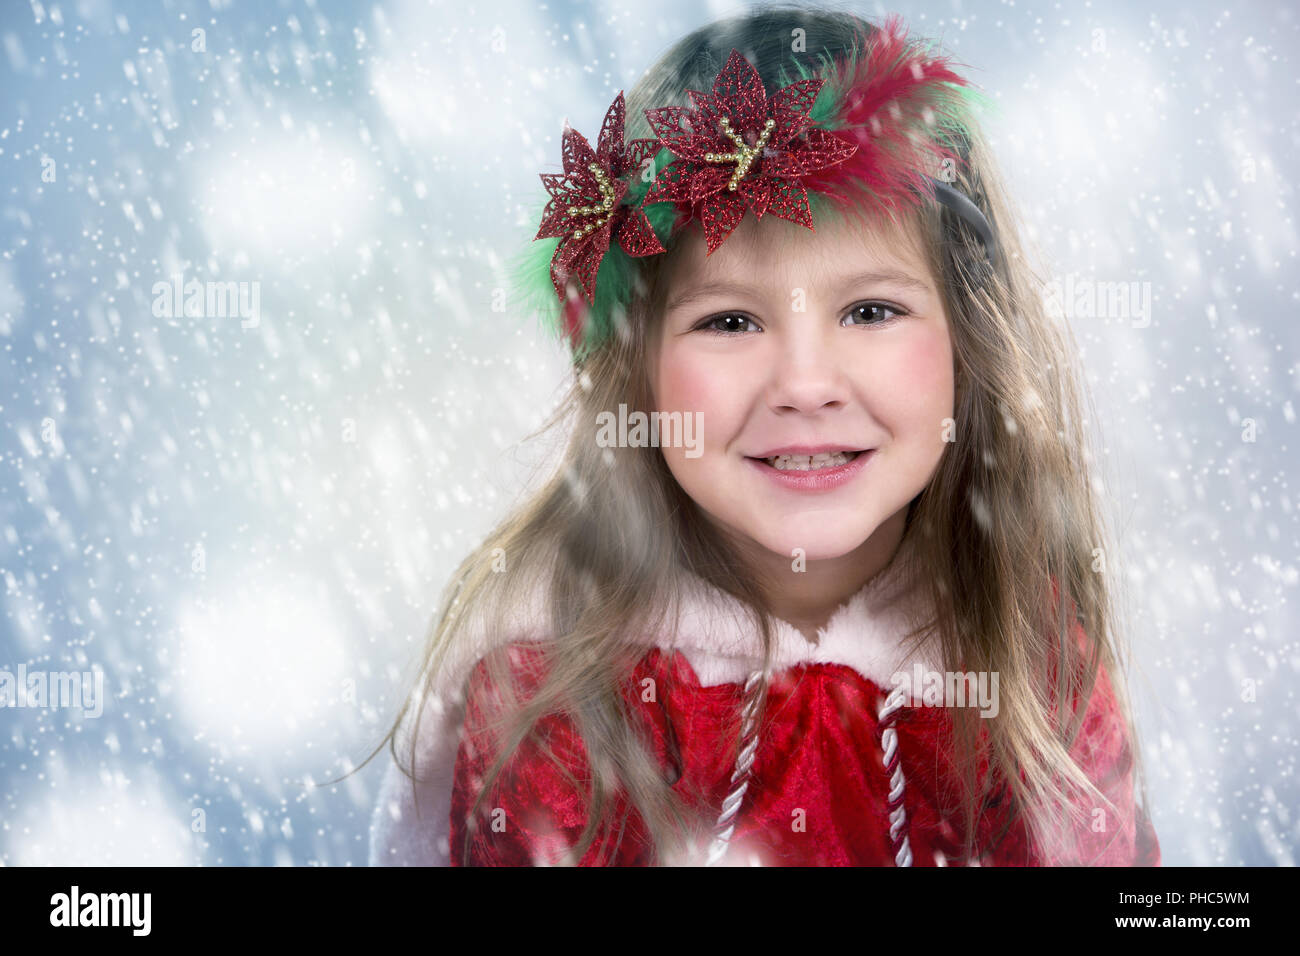 Little Girl As Santa And Elf Stock Photo 217241632 Alamy